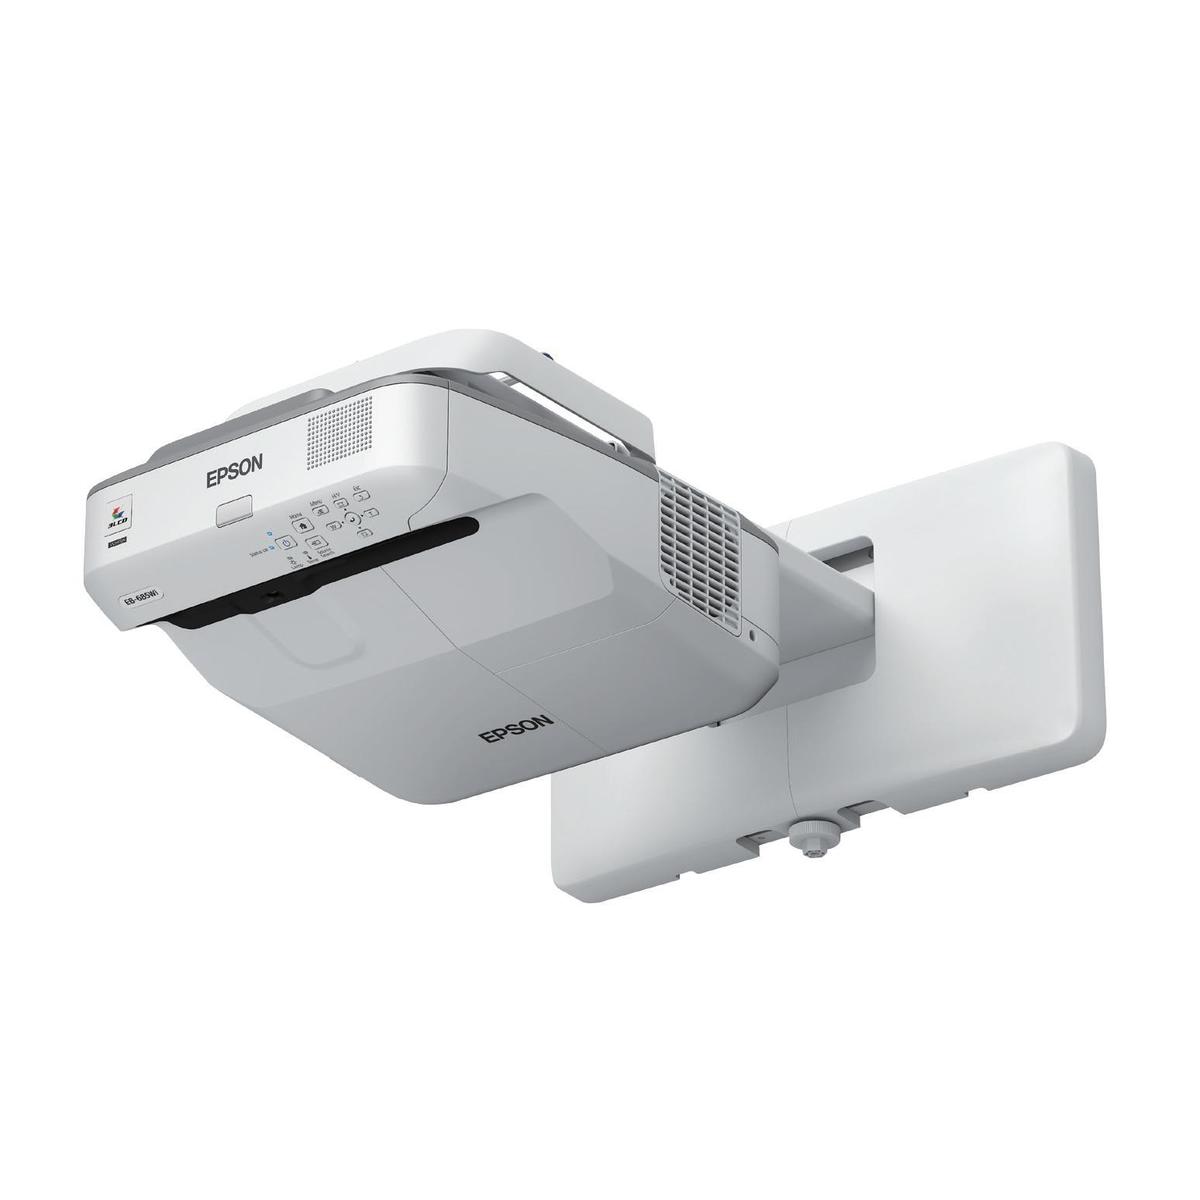 Projecteur Video Epson Eb-685wi - Blanc - 3500 Lumens - Wxga (1280 X 800) - 16:10 - Hdmi, Vga